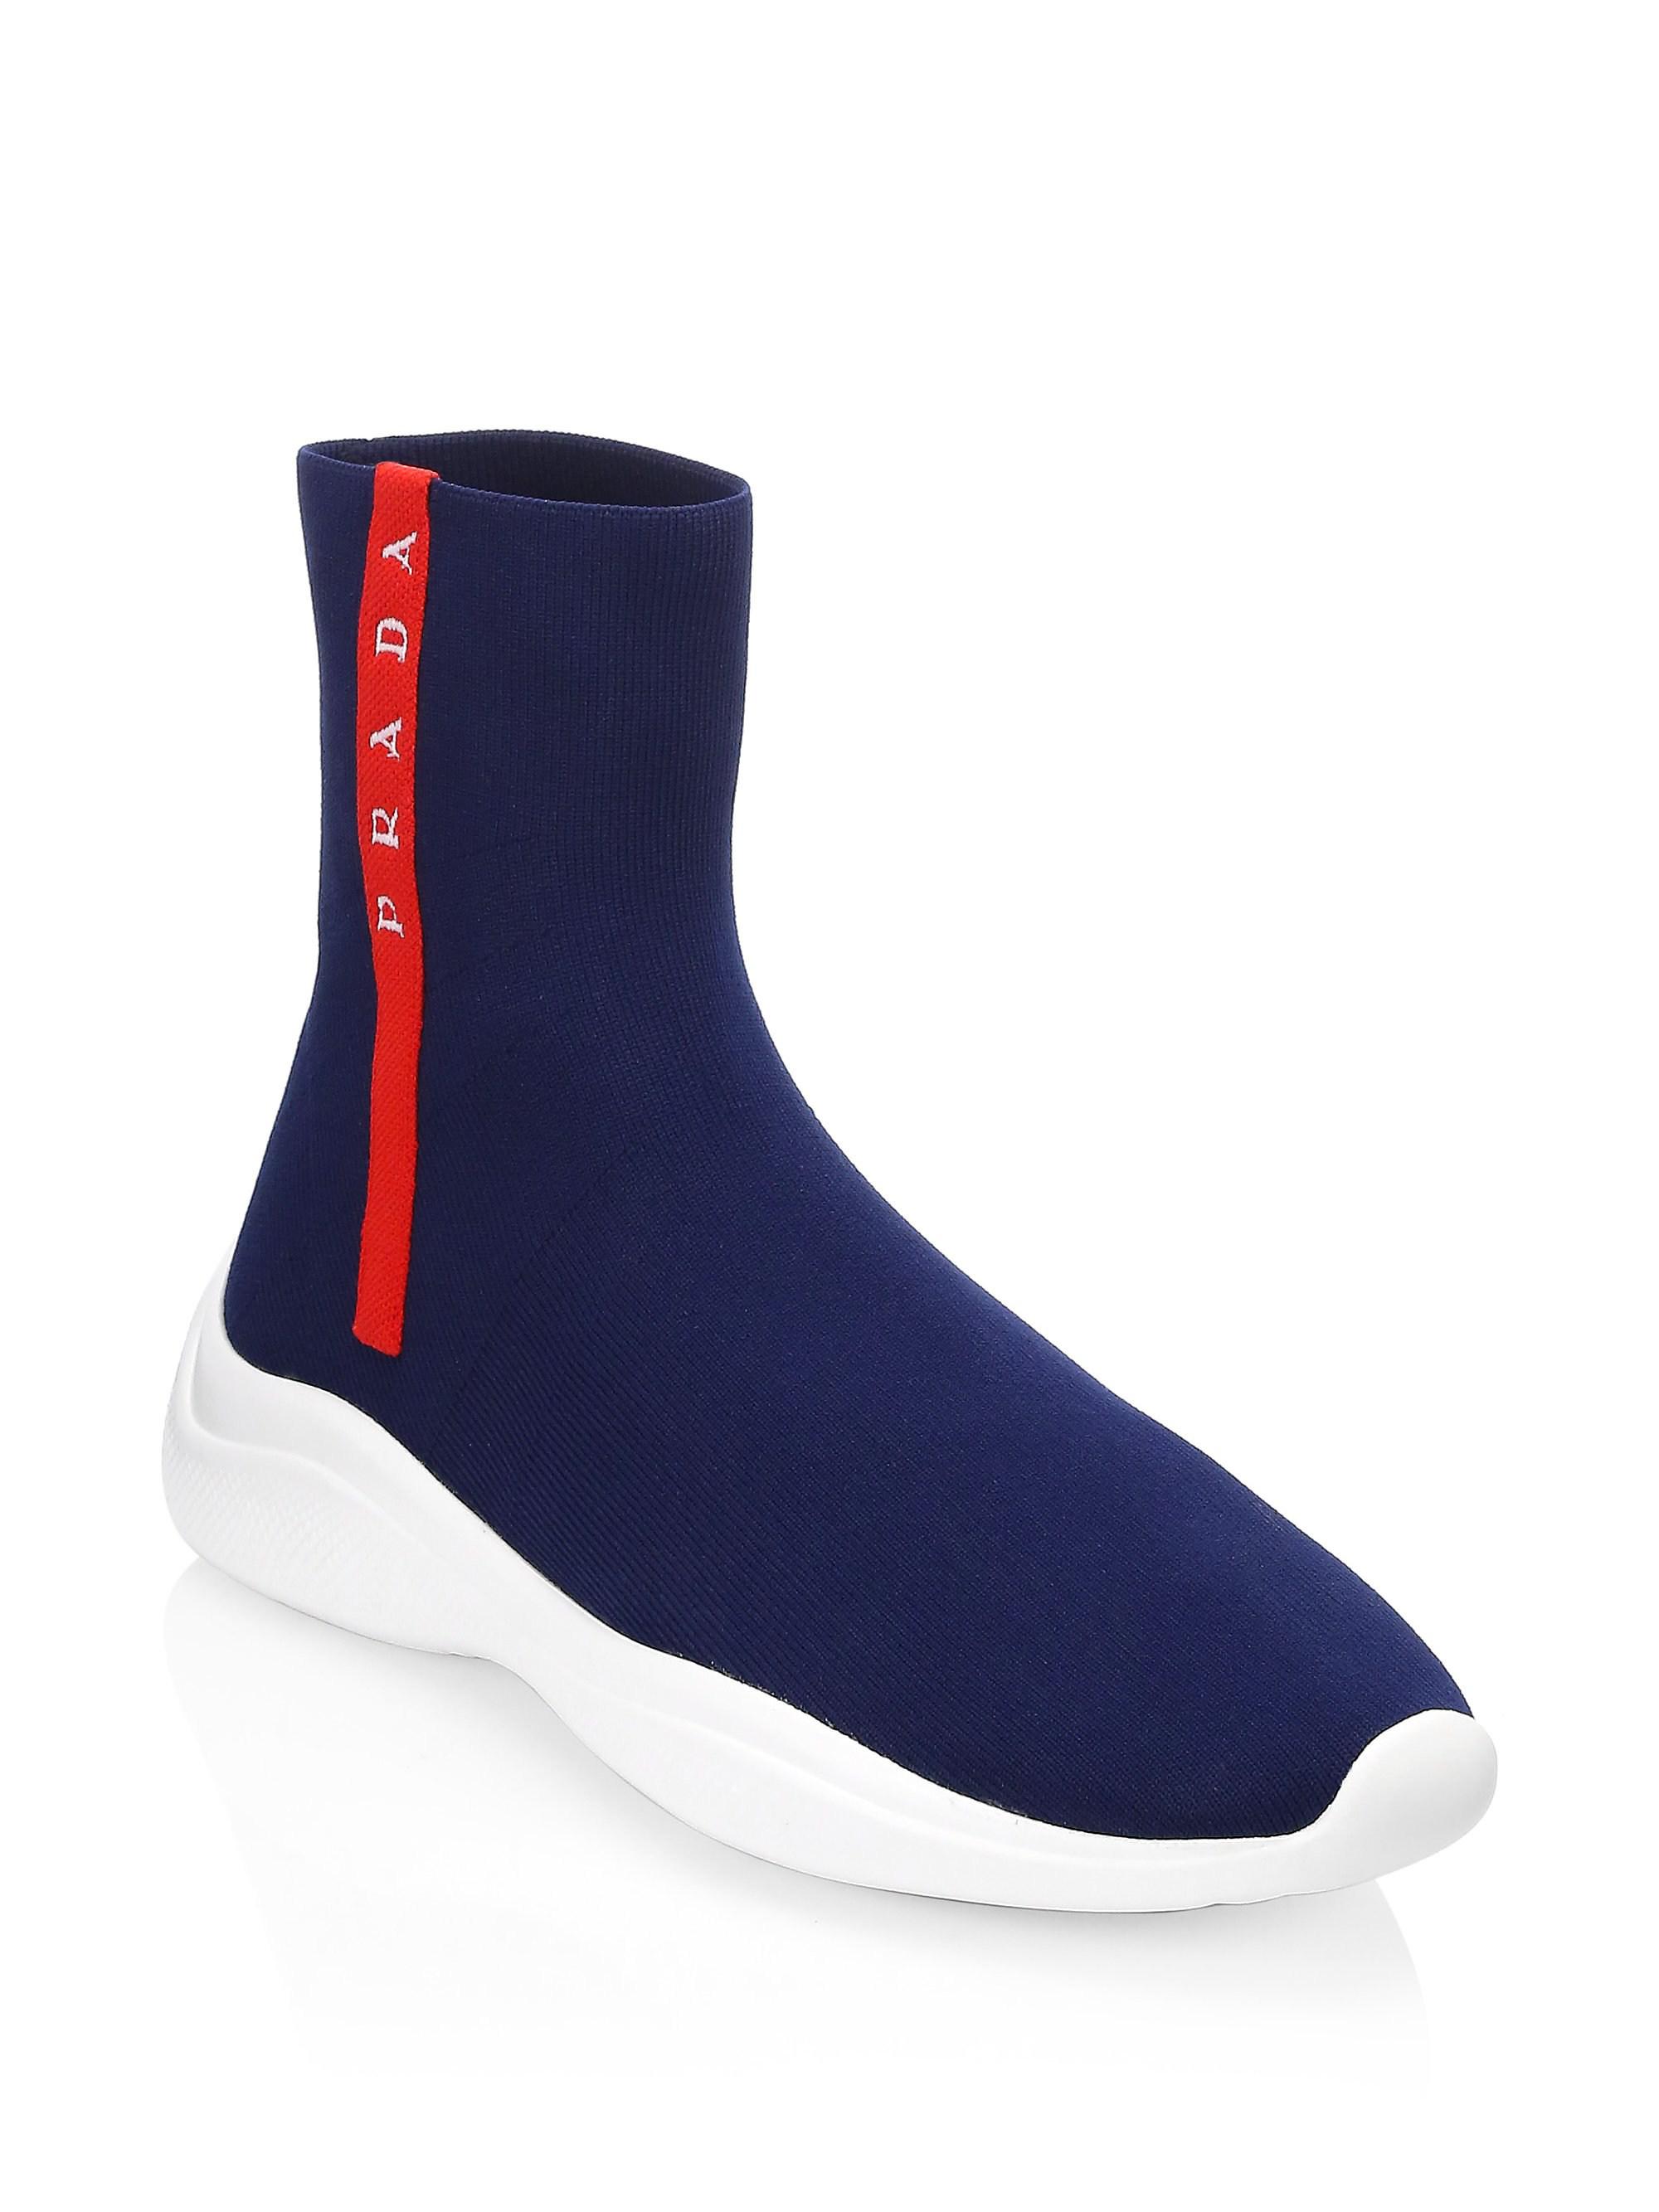 Prada Rubber Logo Sock Sneakers in Navy (Blue) - Lyst